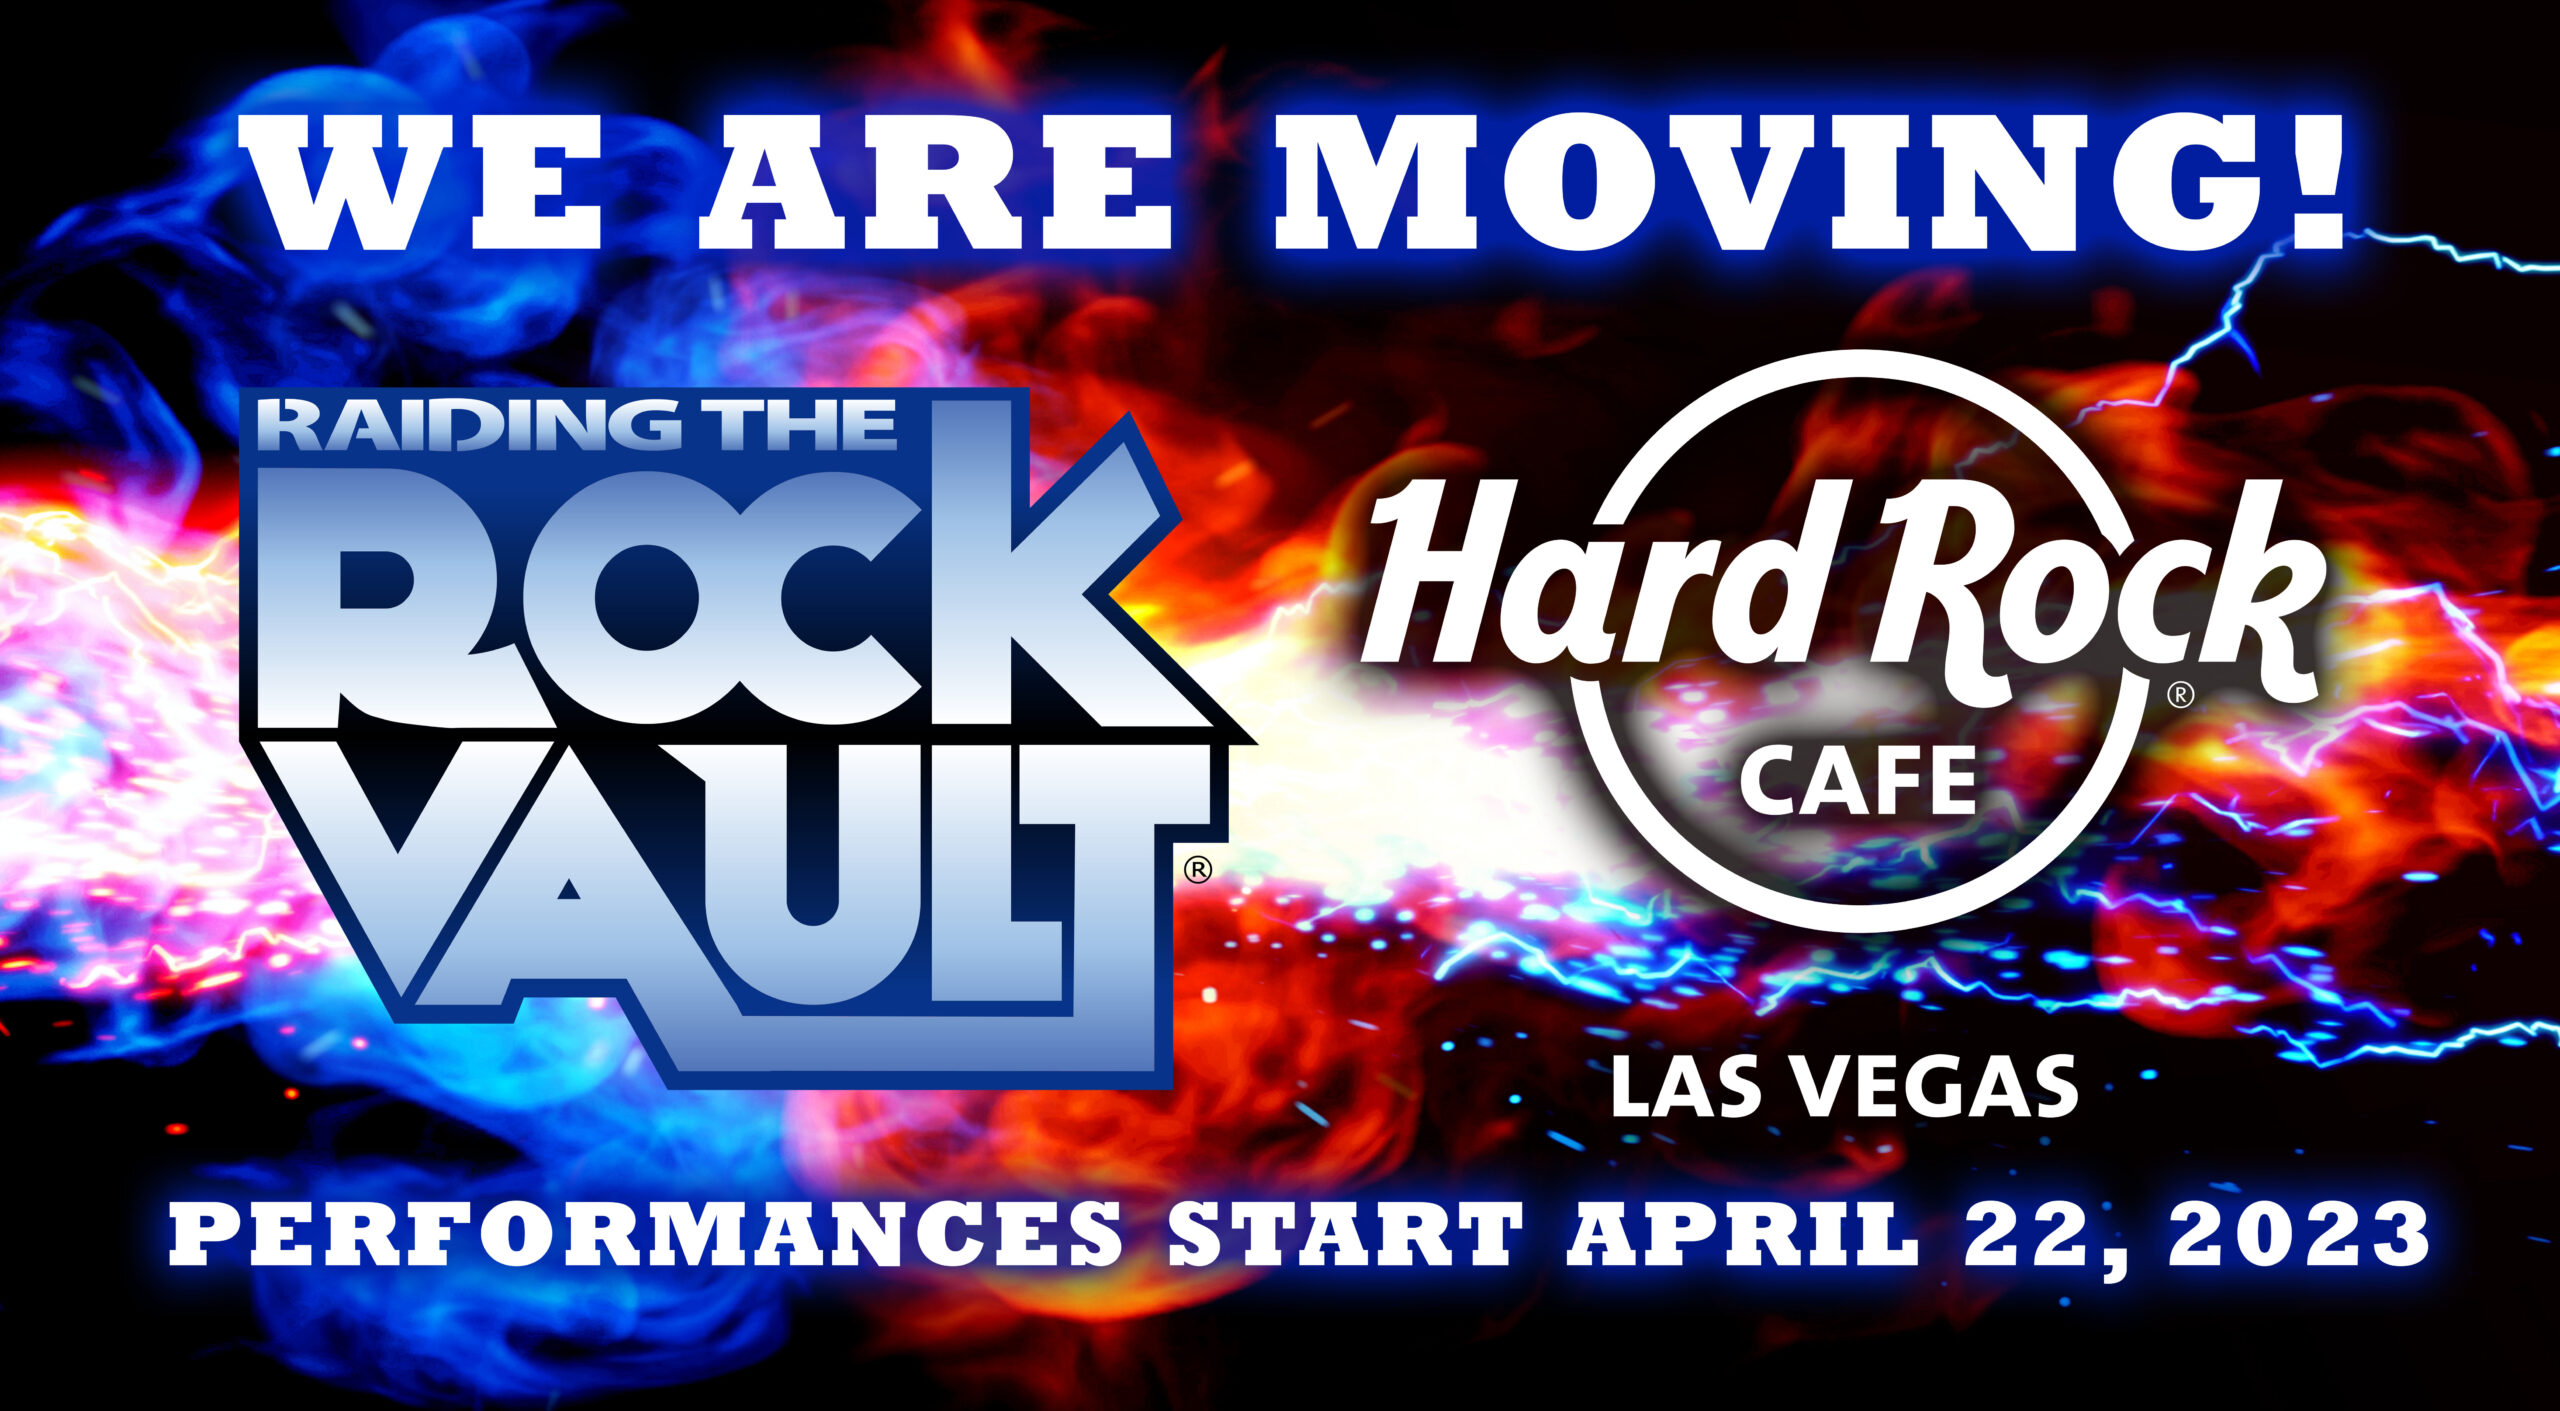 Raiding the Rock Vault Moving to Hard Rock Cafe Las Vegas Strip!